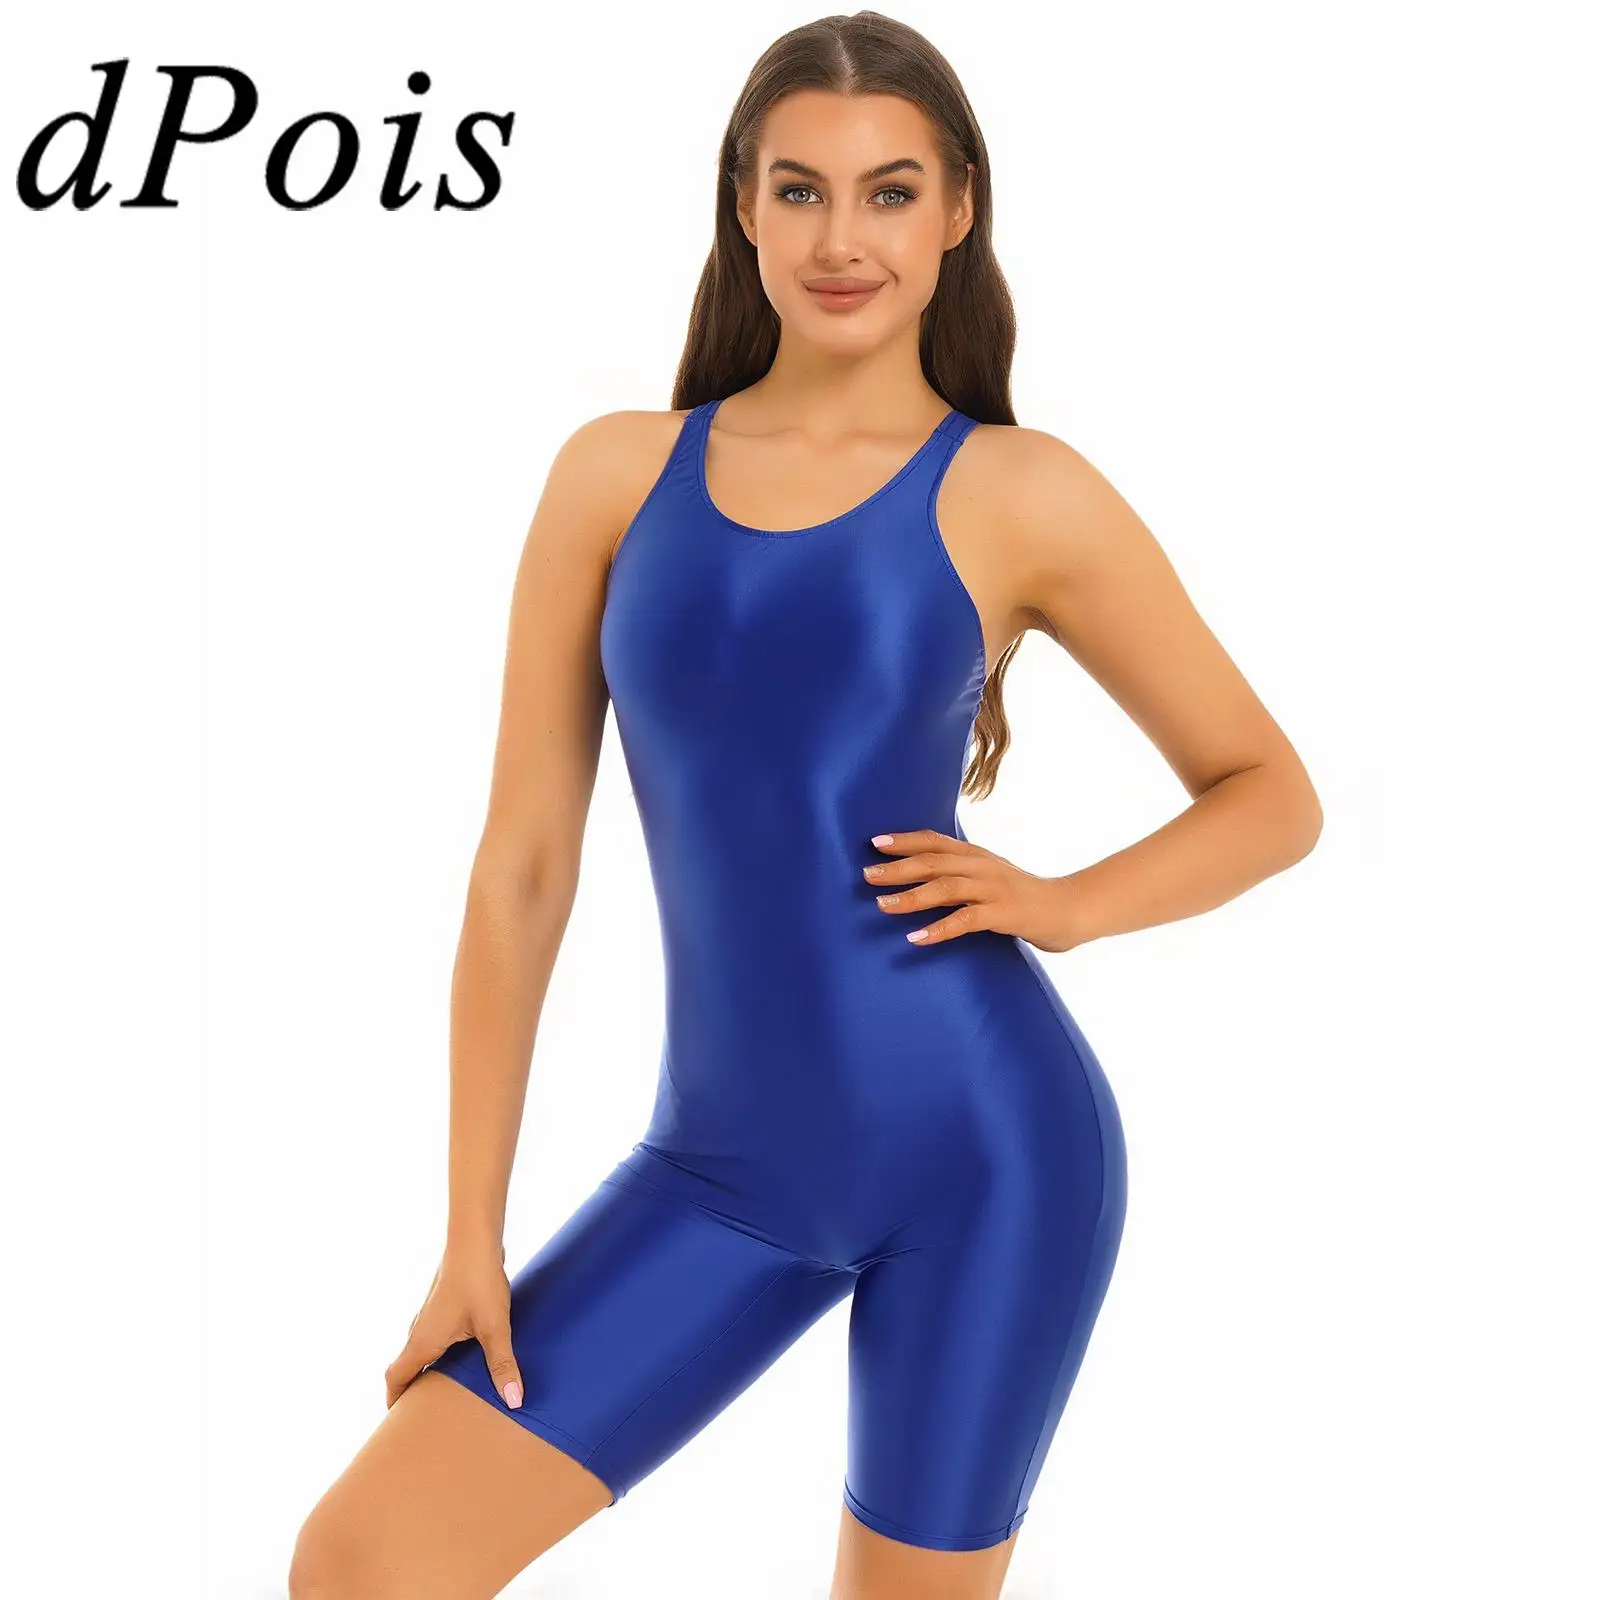 

Womens Glossy One-piece Lingerie Cutout Back Bodysuit Swimsuit Bathing Suit Sleeveless Gymnastics Unitard Leotard Clubwear